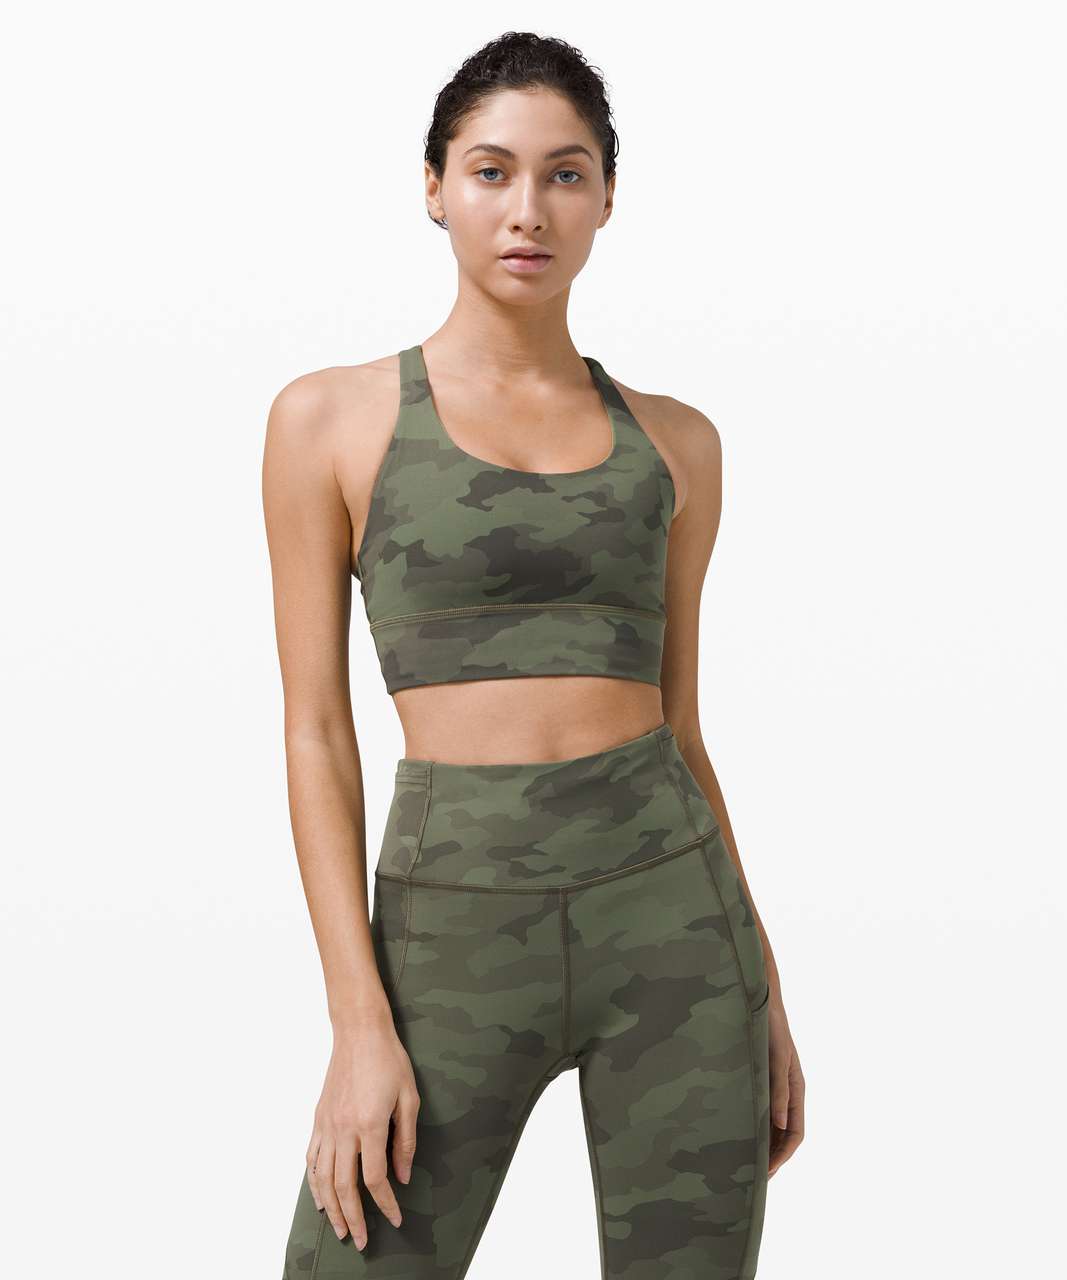 La Senza | Medium Army Green Sports Bra With Camouflage Mesh